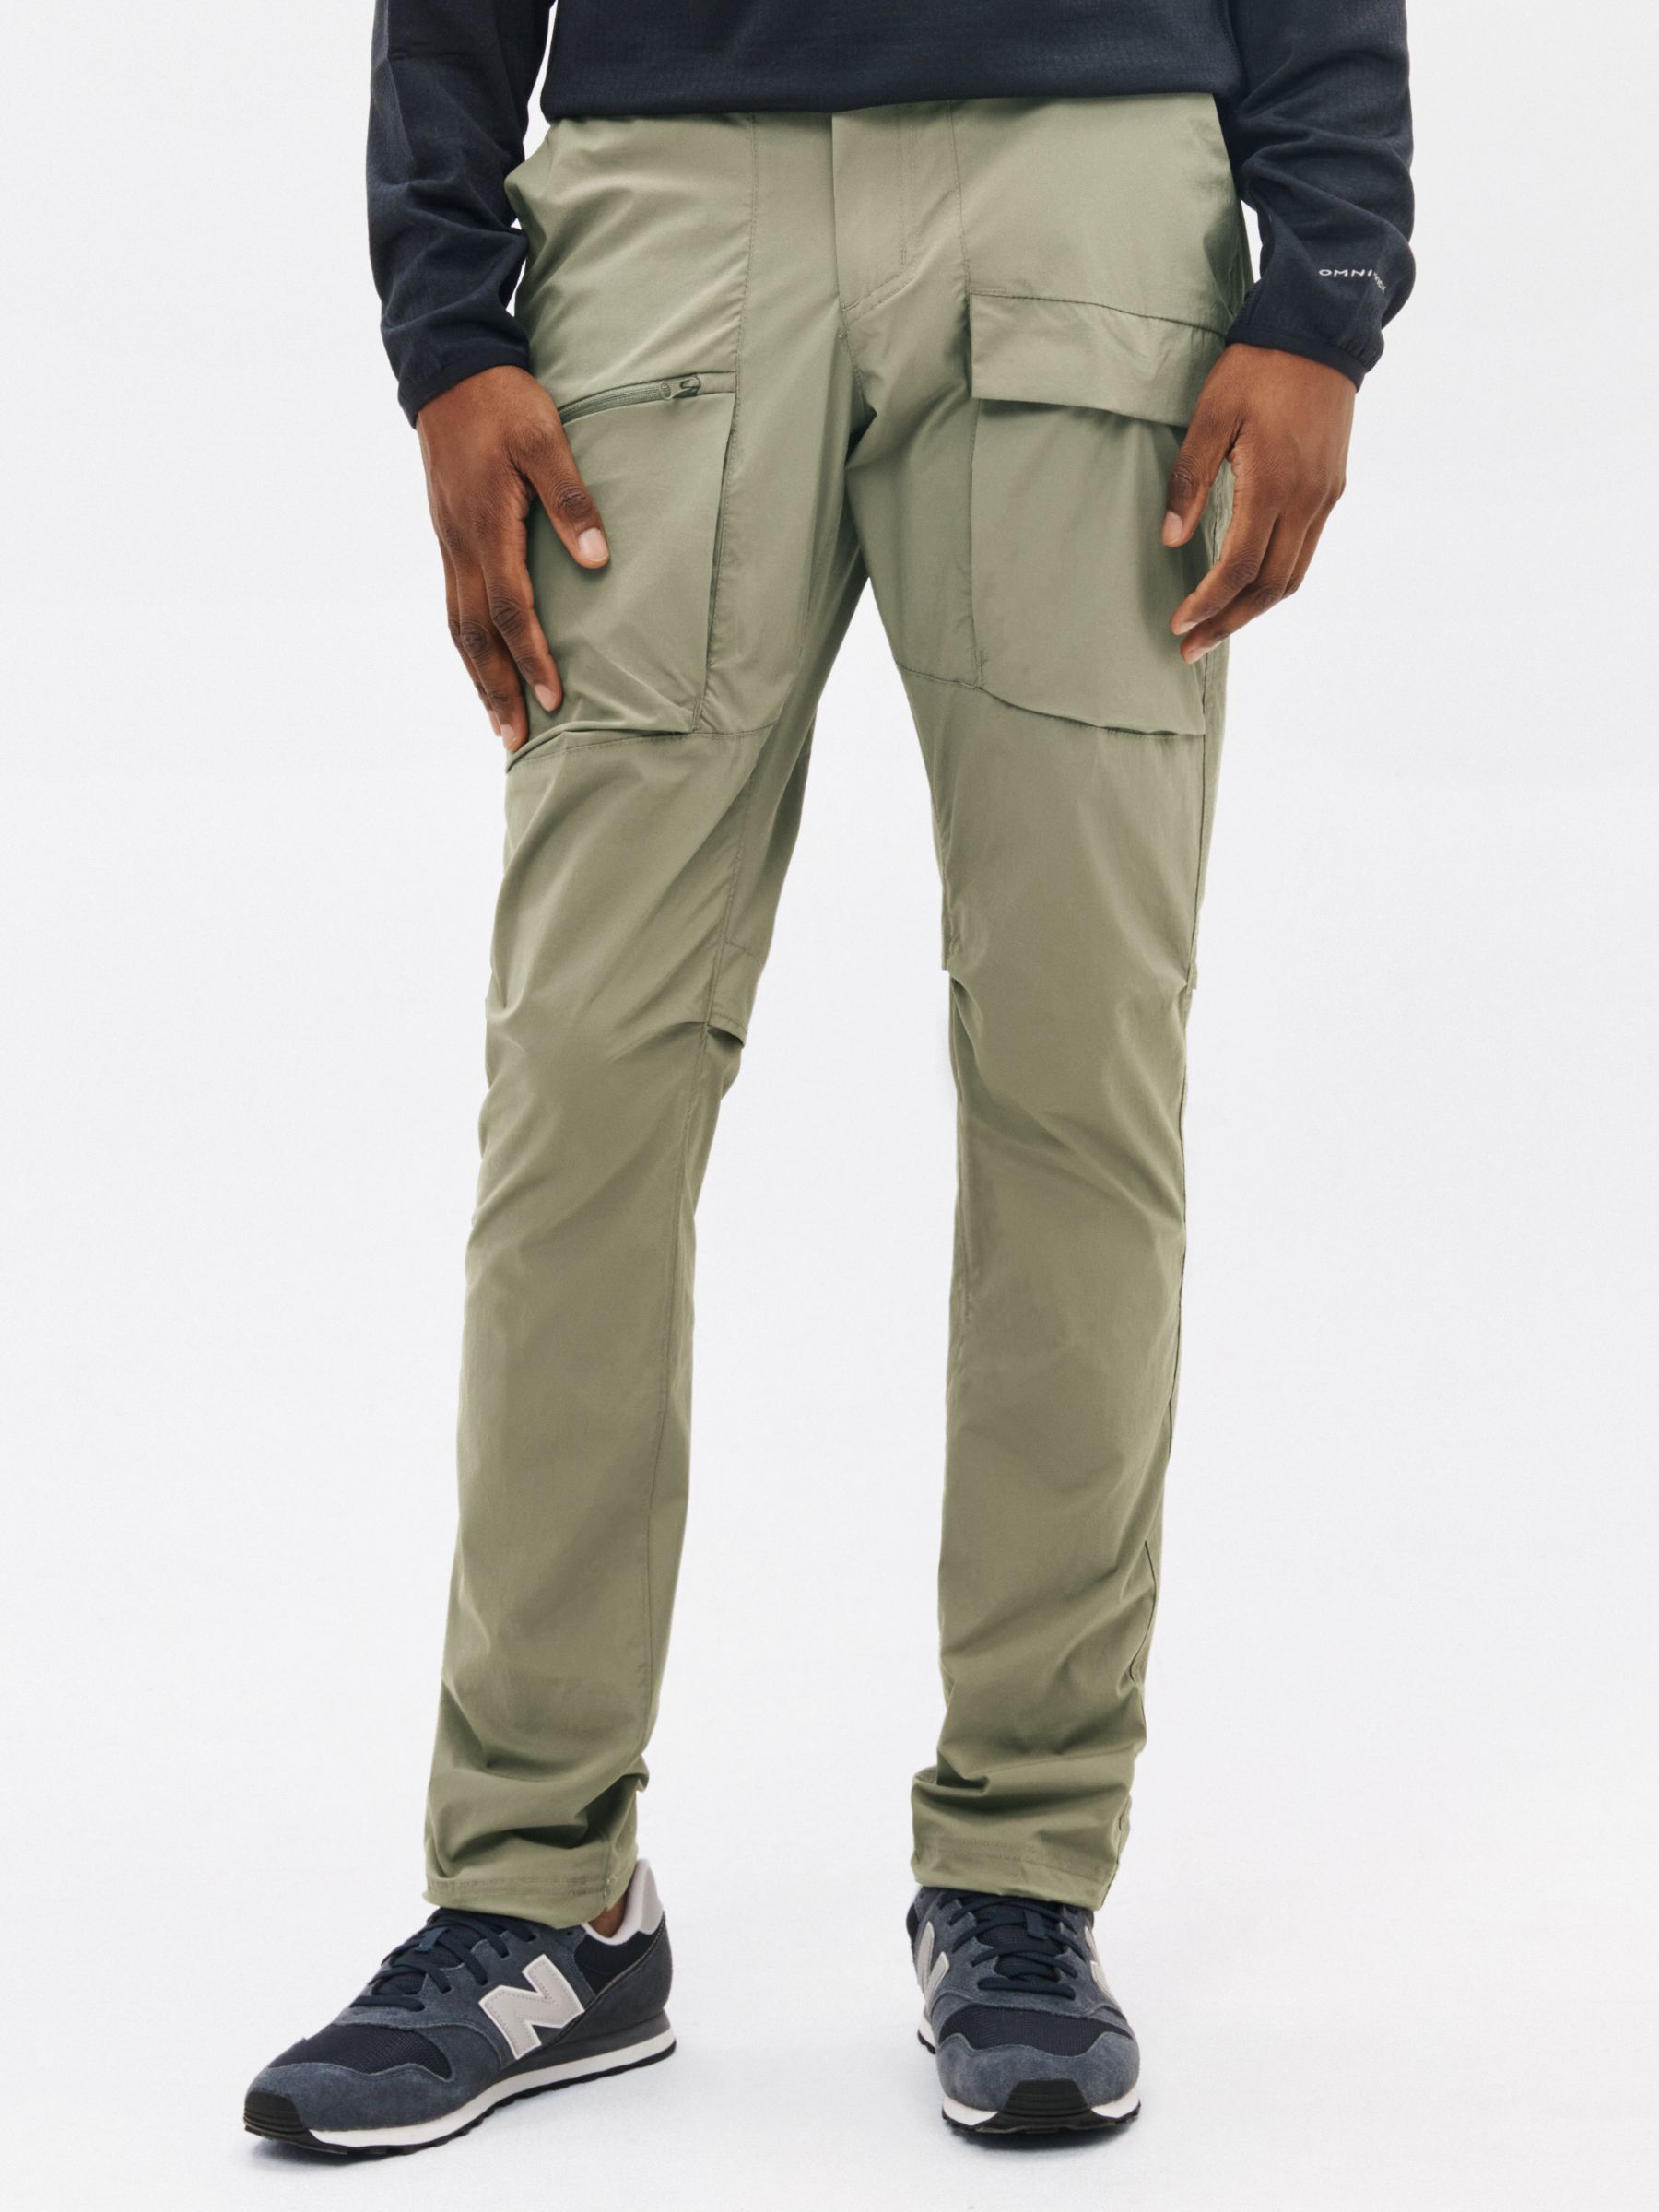 Columbia pants, Green Columbia Omni shield pants.